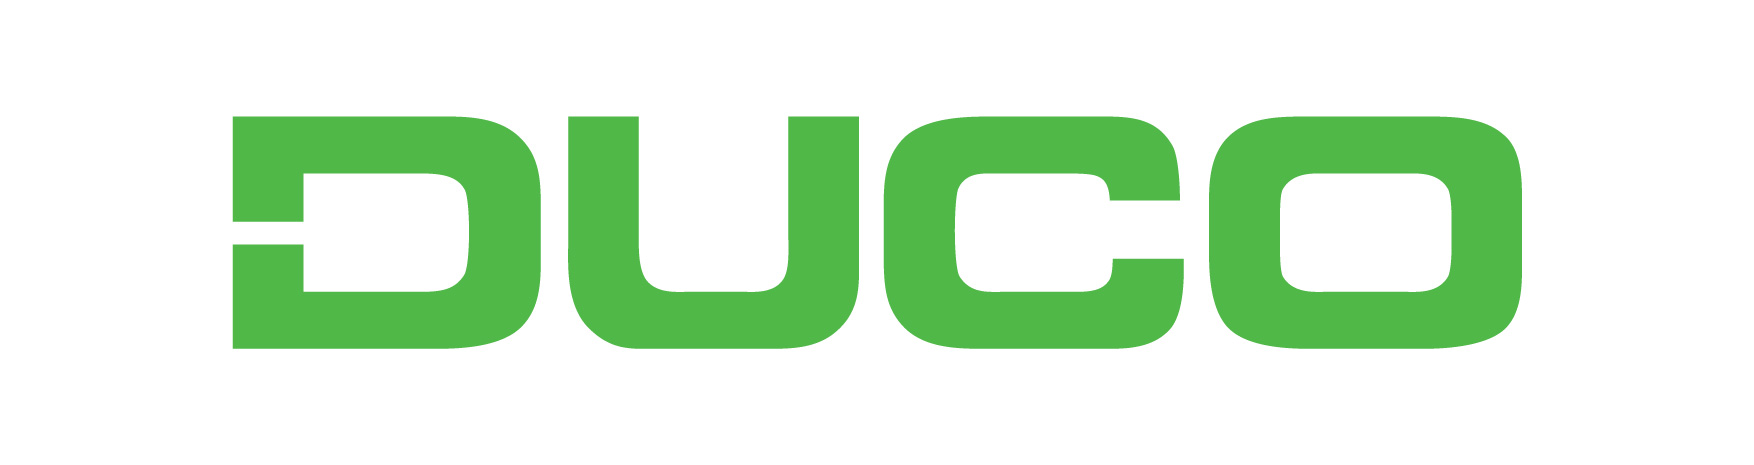 duco-logo-no-baseline-GREEN-sRGB.jpg